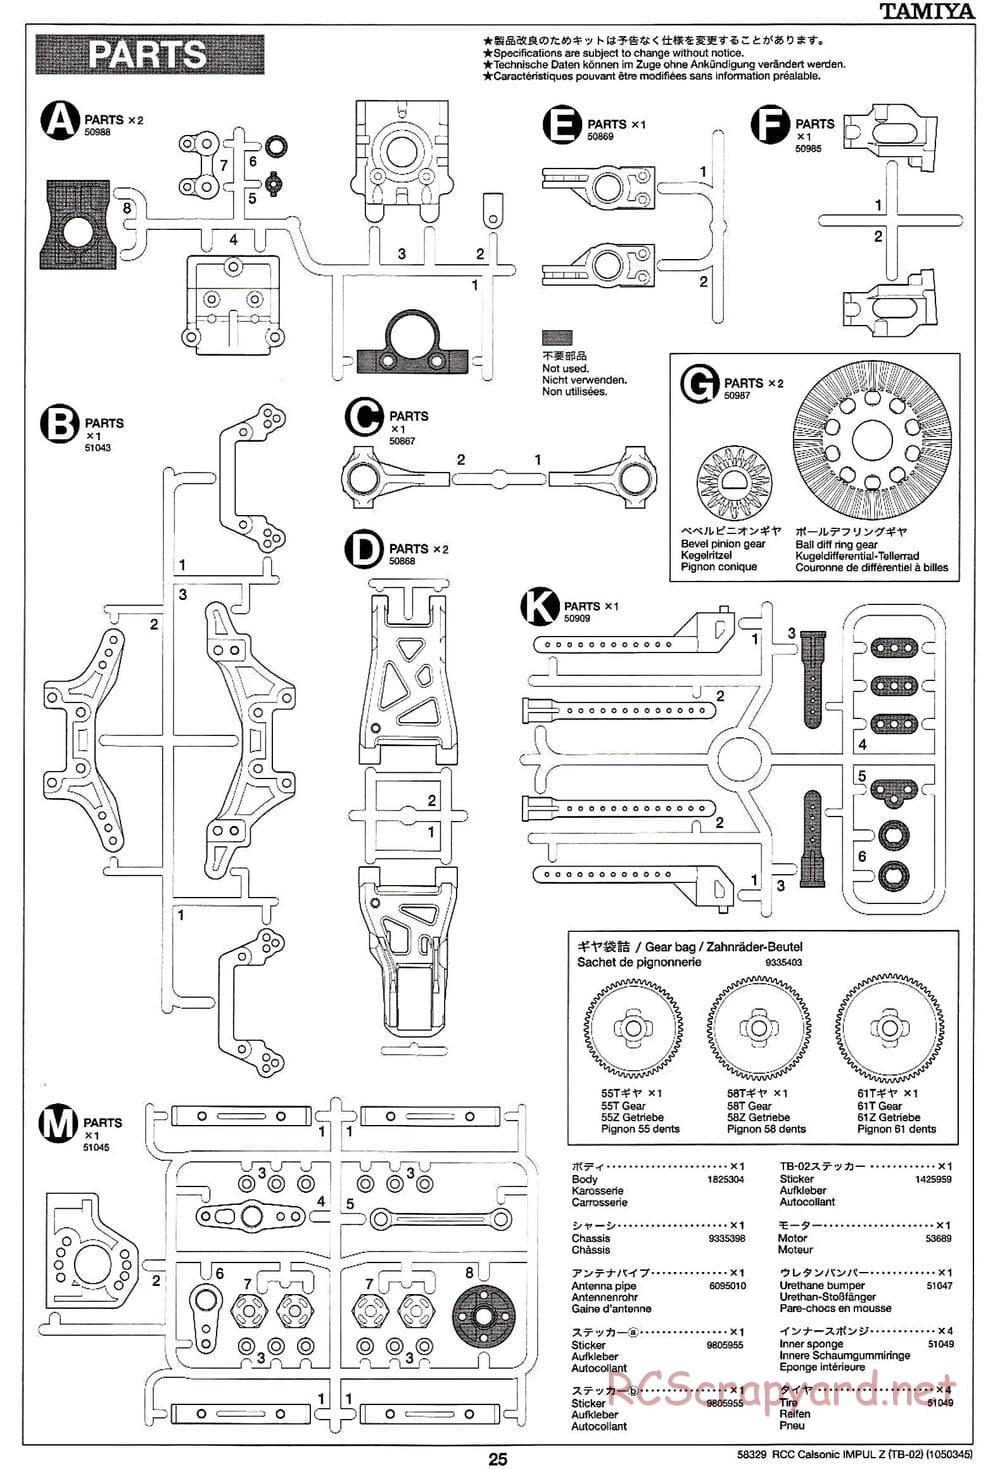 Tamiya - Calsonic Impul Z - TB-02 Chassis - Manual - Page 25